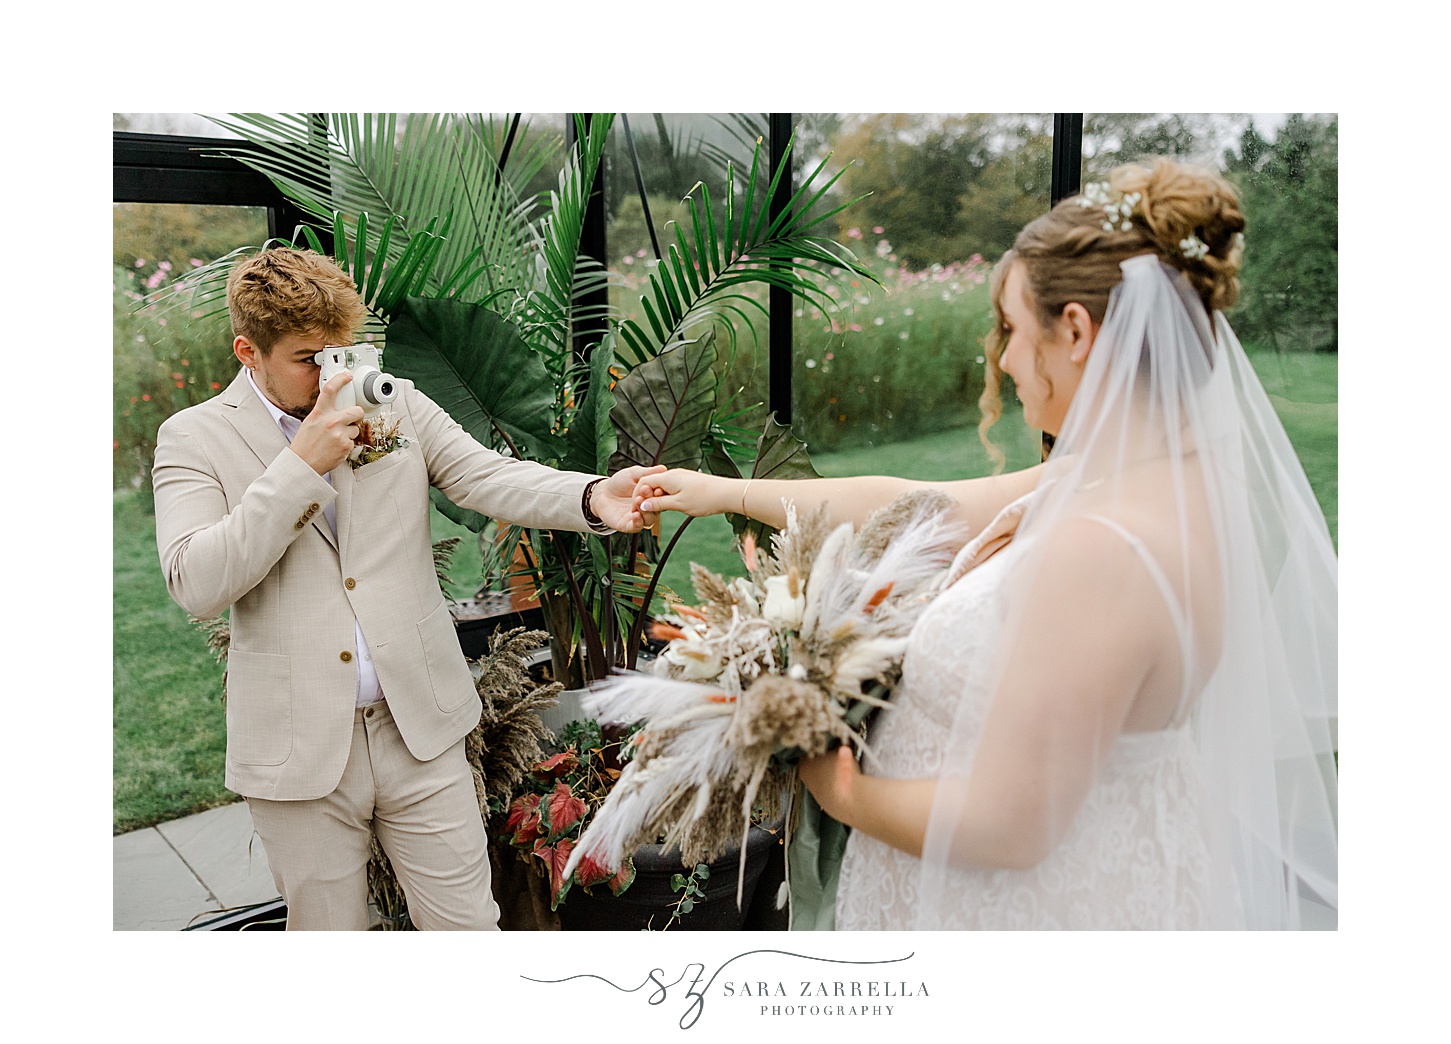 groom takes photo of bride with Polaroid camera